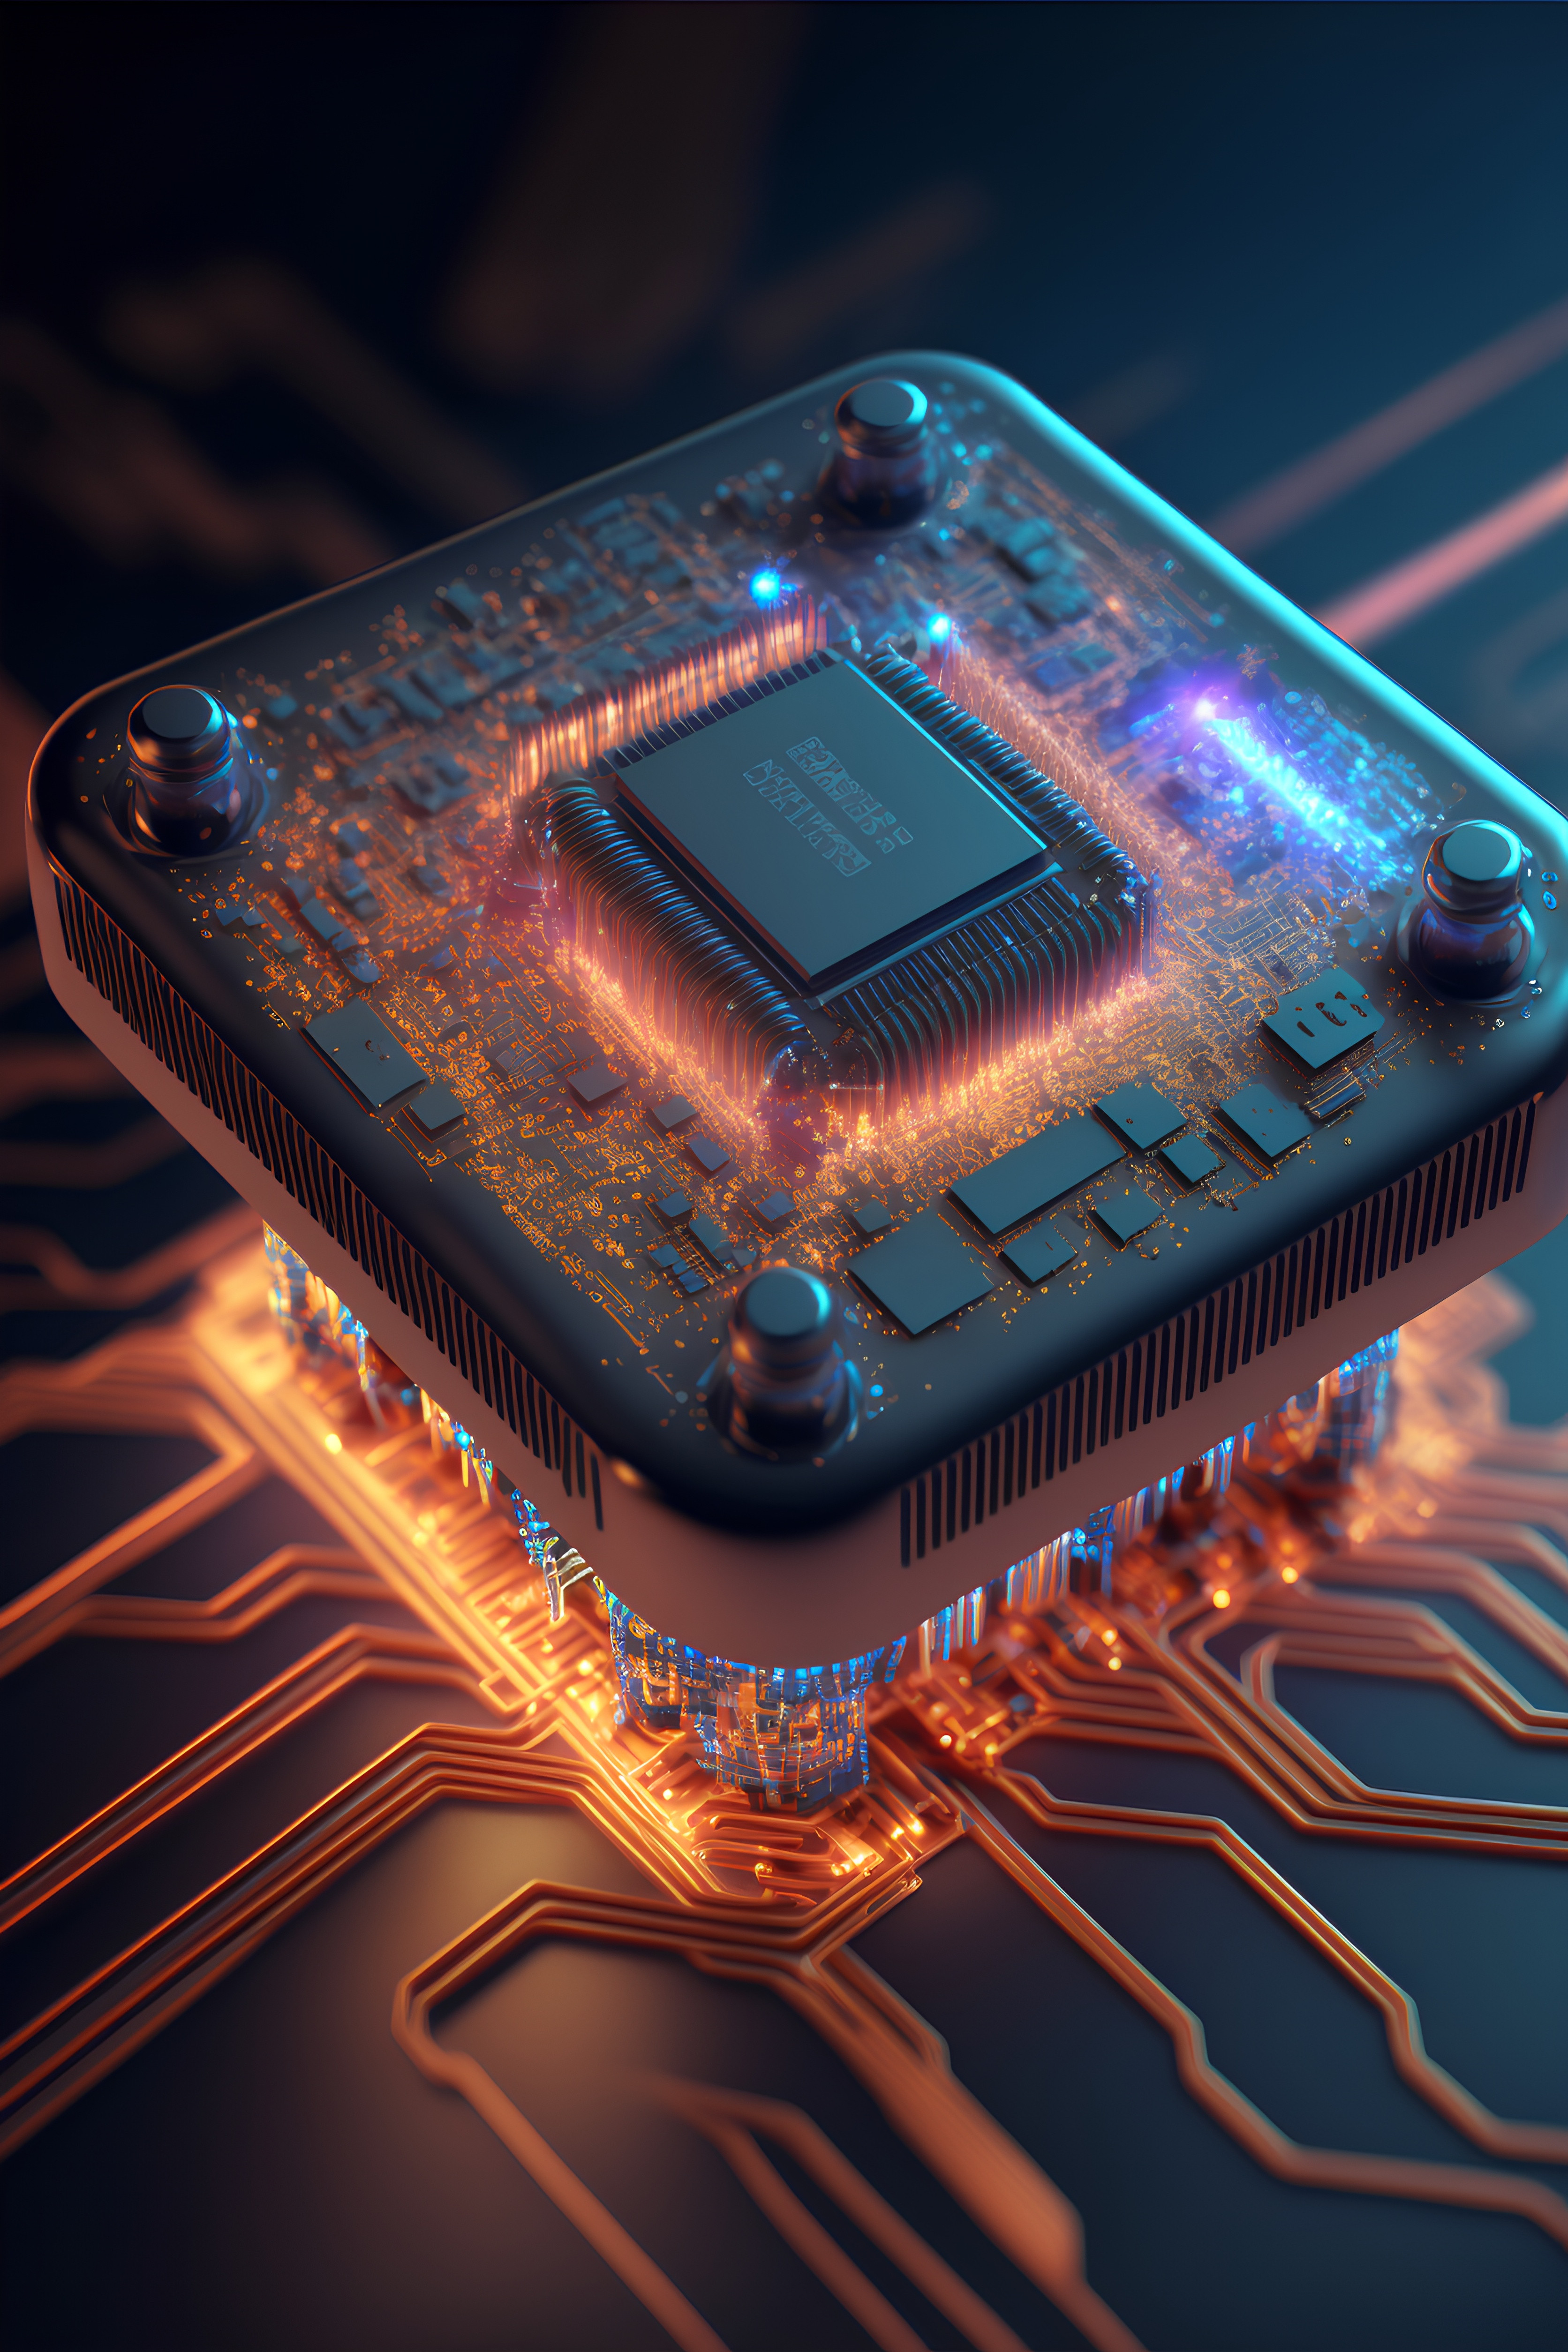 CPU internal components